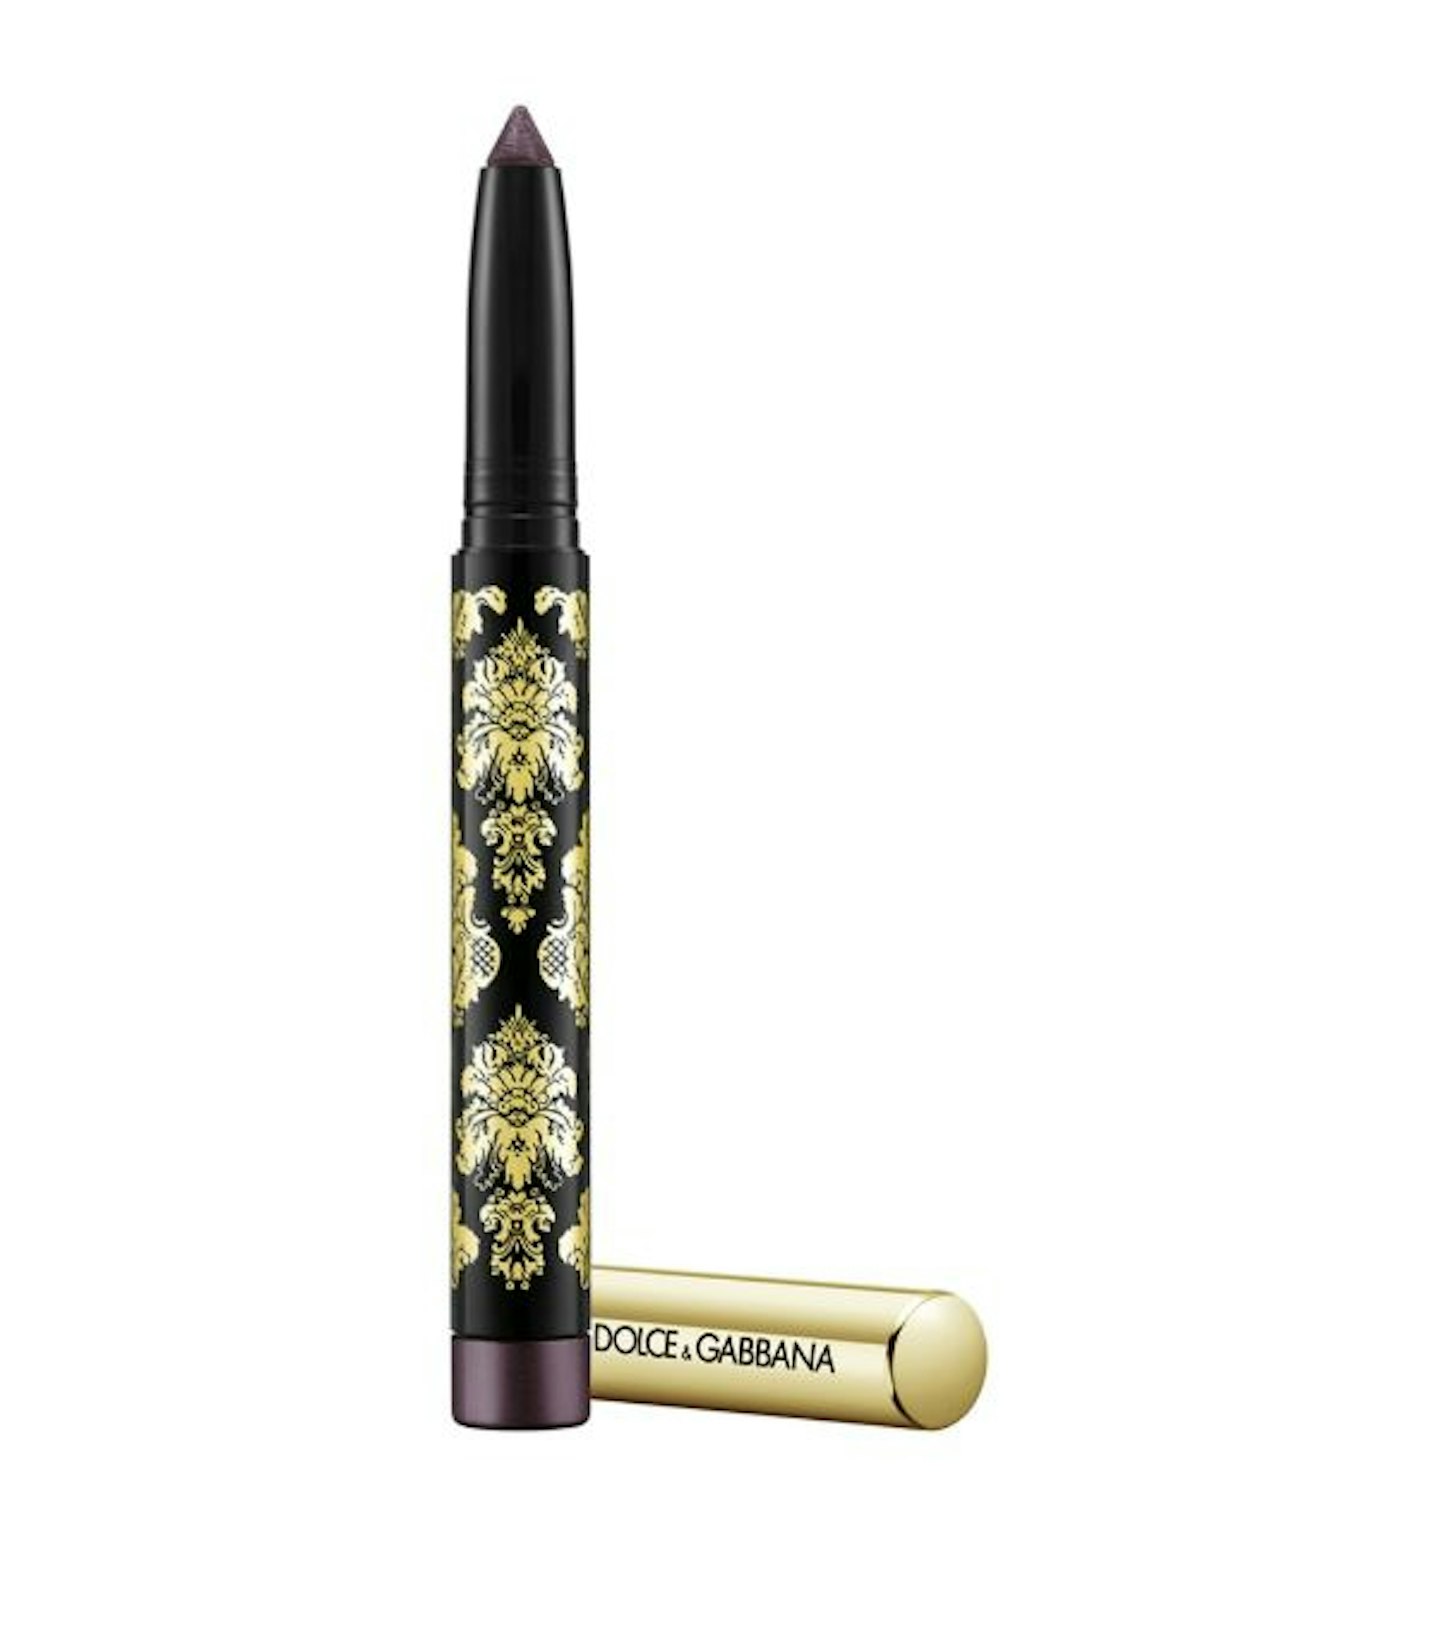 Dolce & Gabbana Intenseyes Creamy Eyeshadow Stick in Dahlia, £30